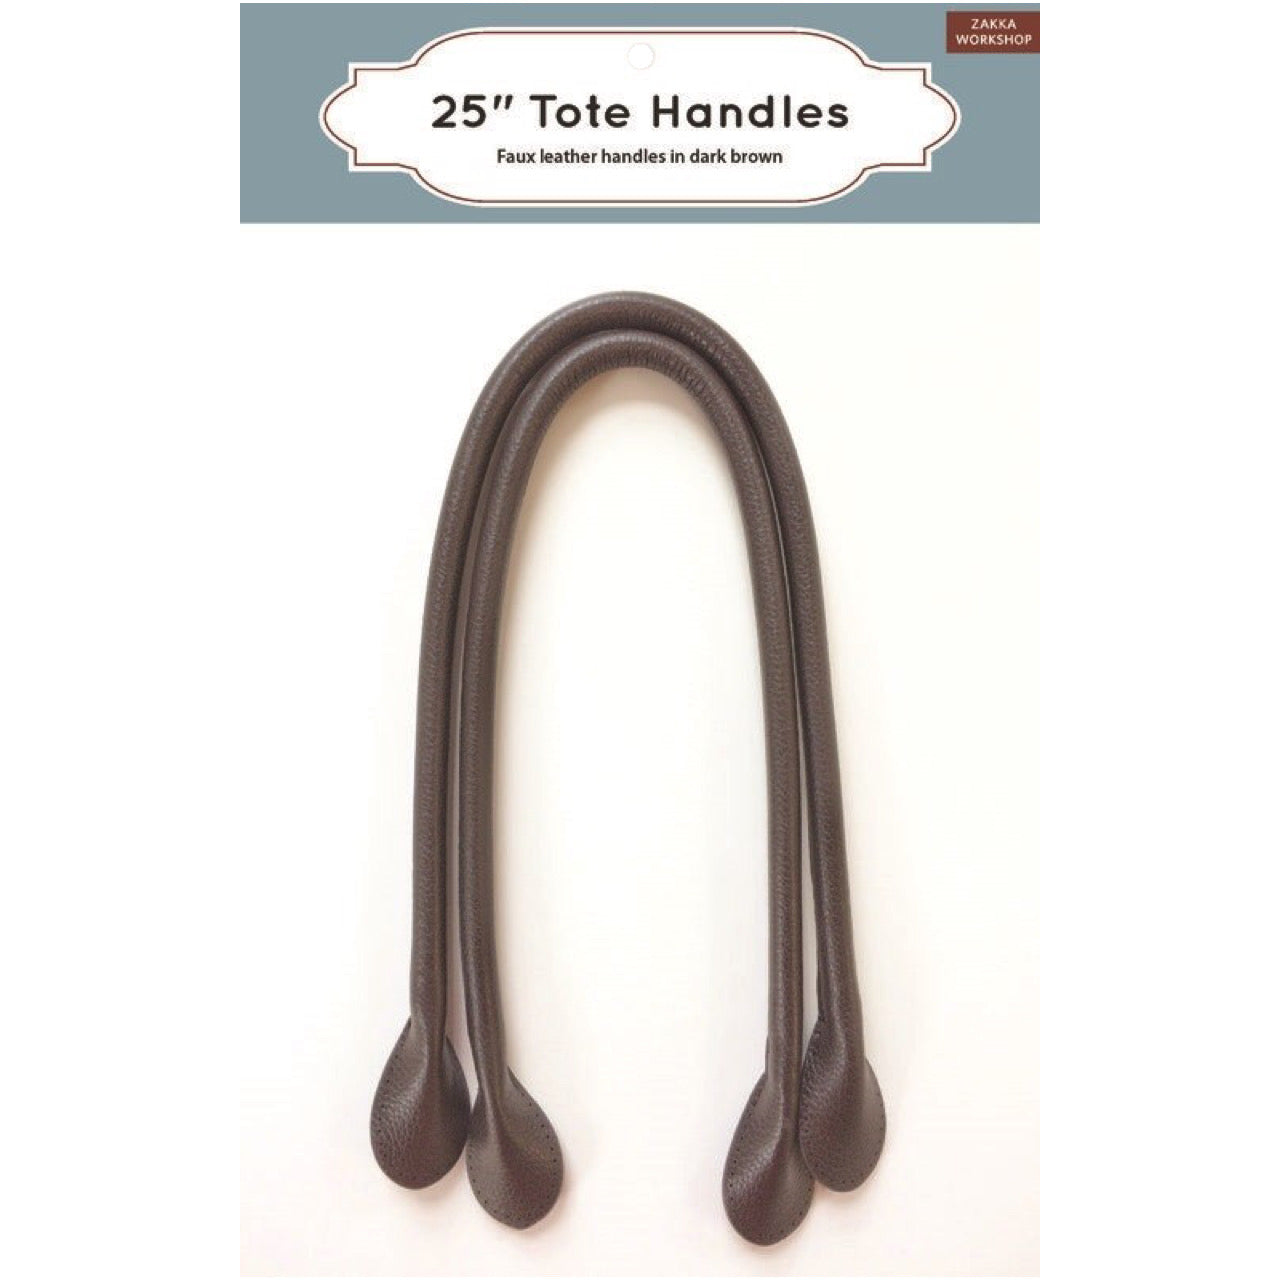 Zakka Workshop Tote Handles - 24” Brown Faux Leather